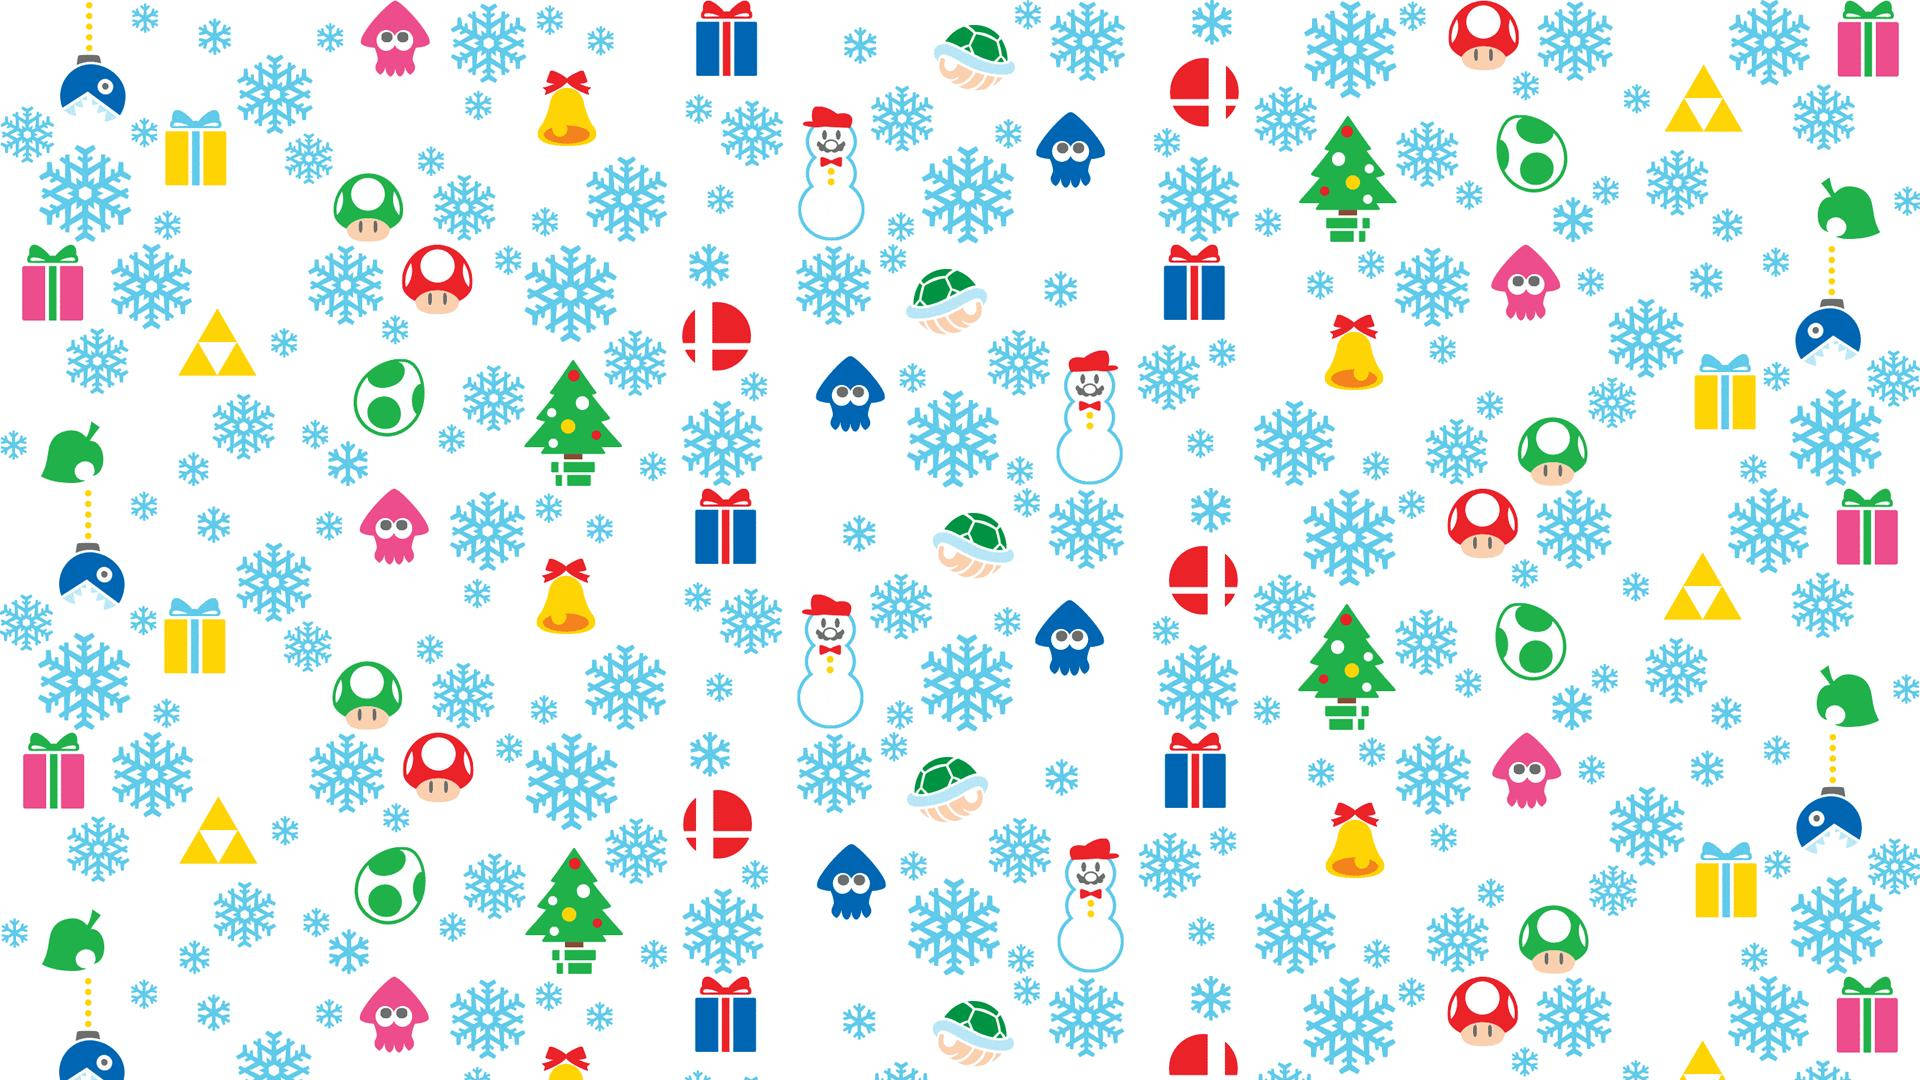 Nintendo Christmas icons pattern wallpaper